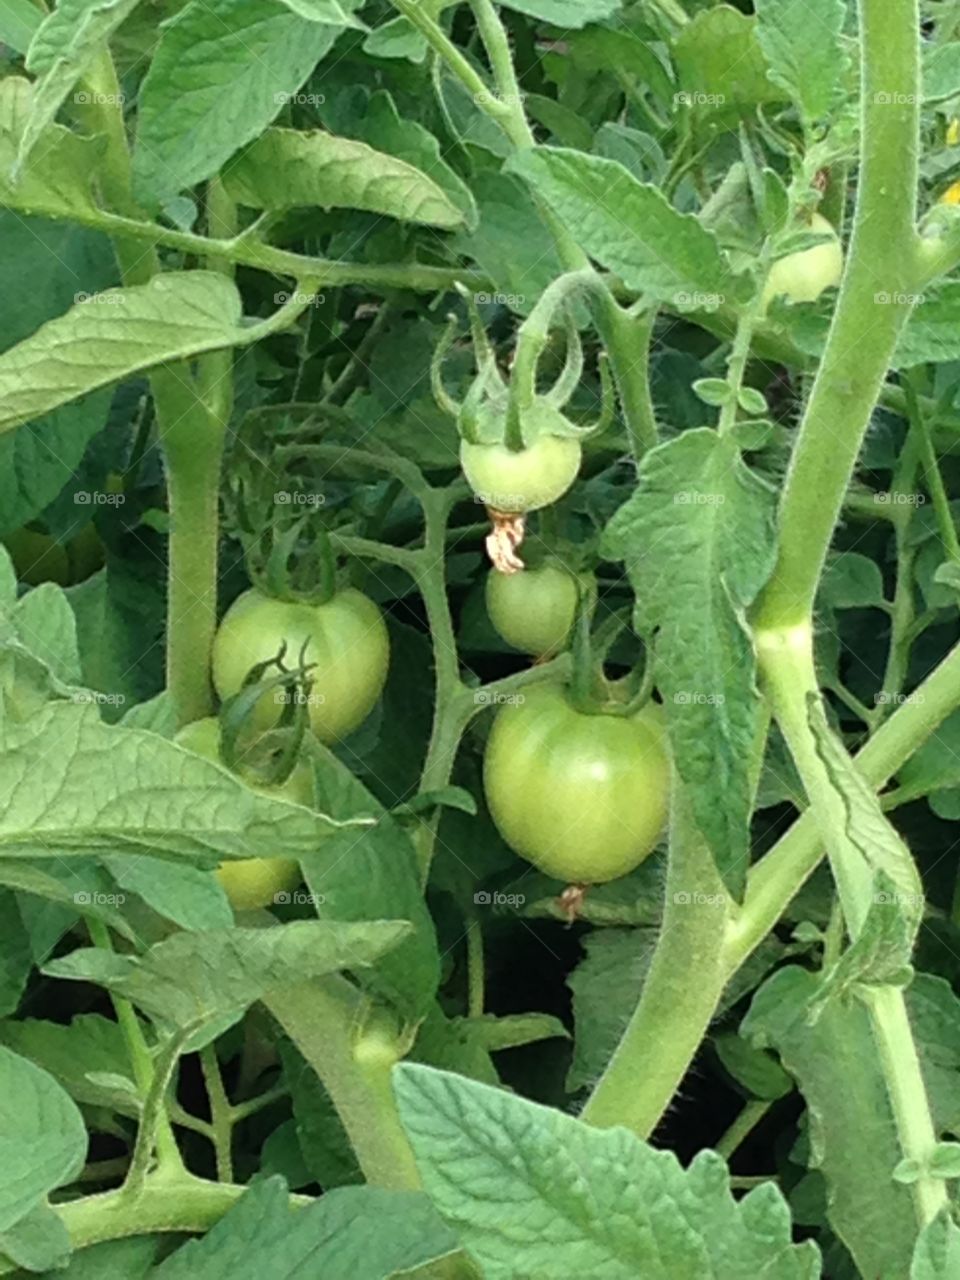 Growing tomatoes 